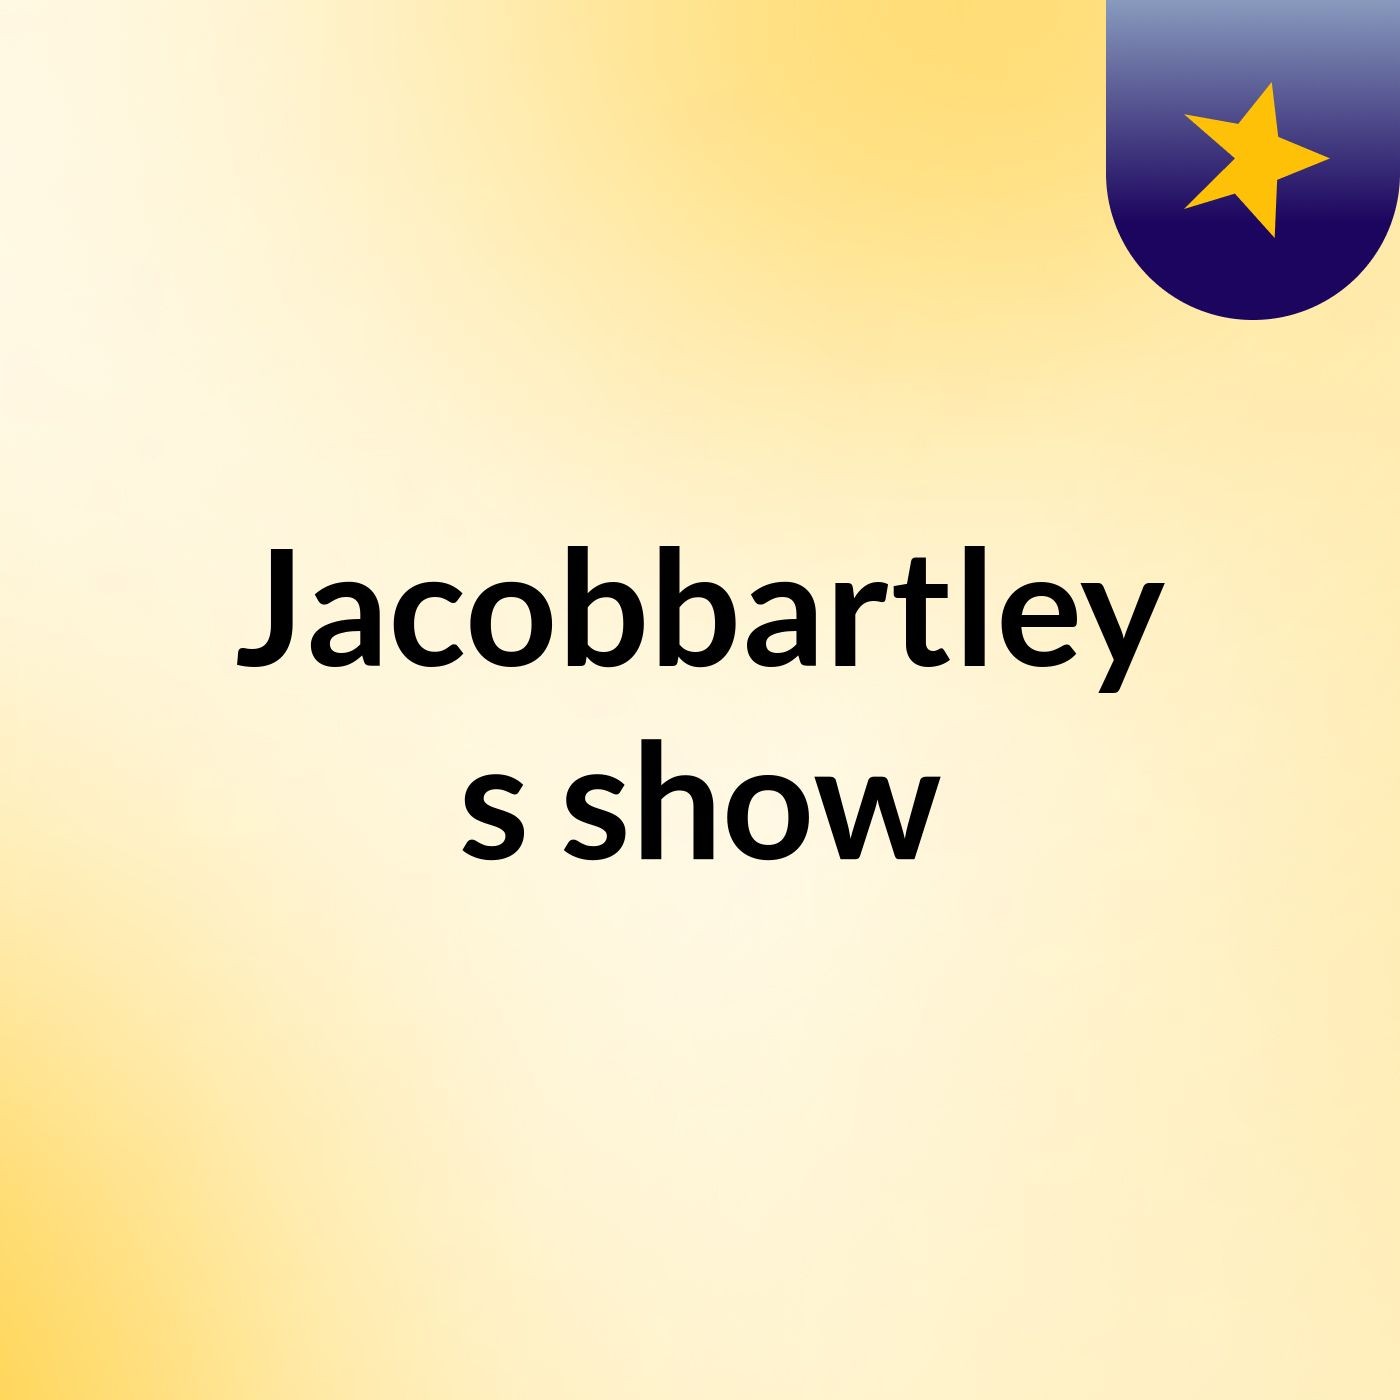 Jacobbartley's show